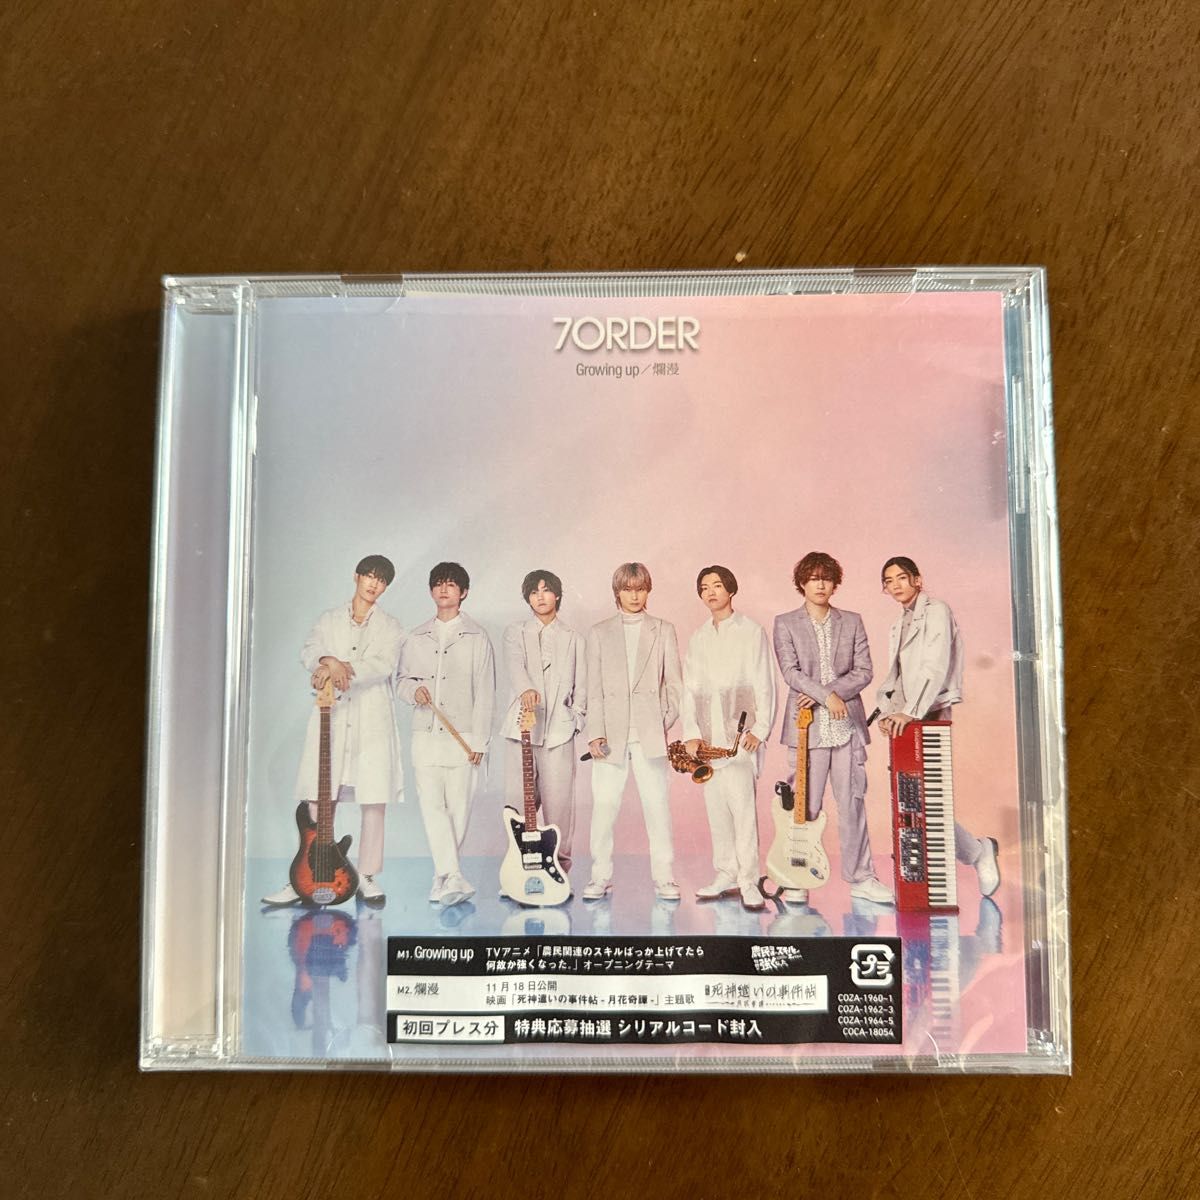 7ORDER CD 爛漫 growing up